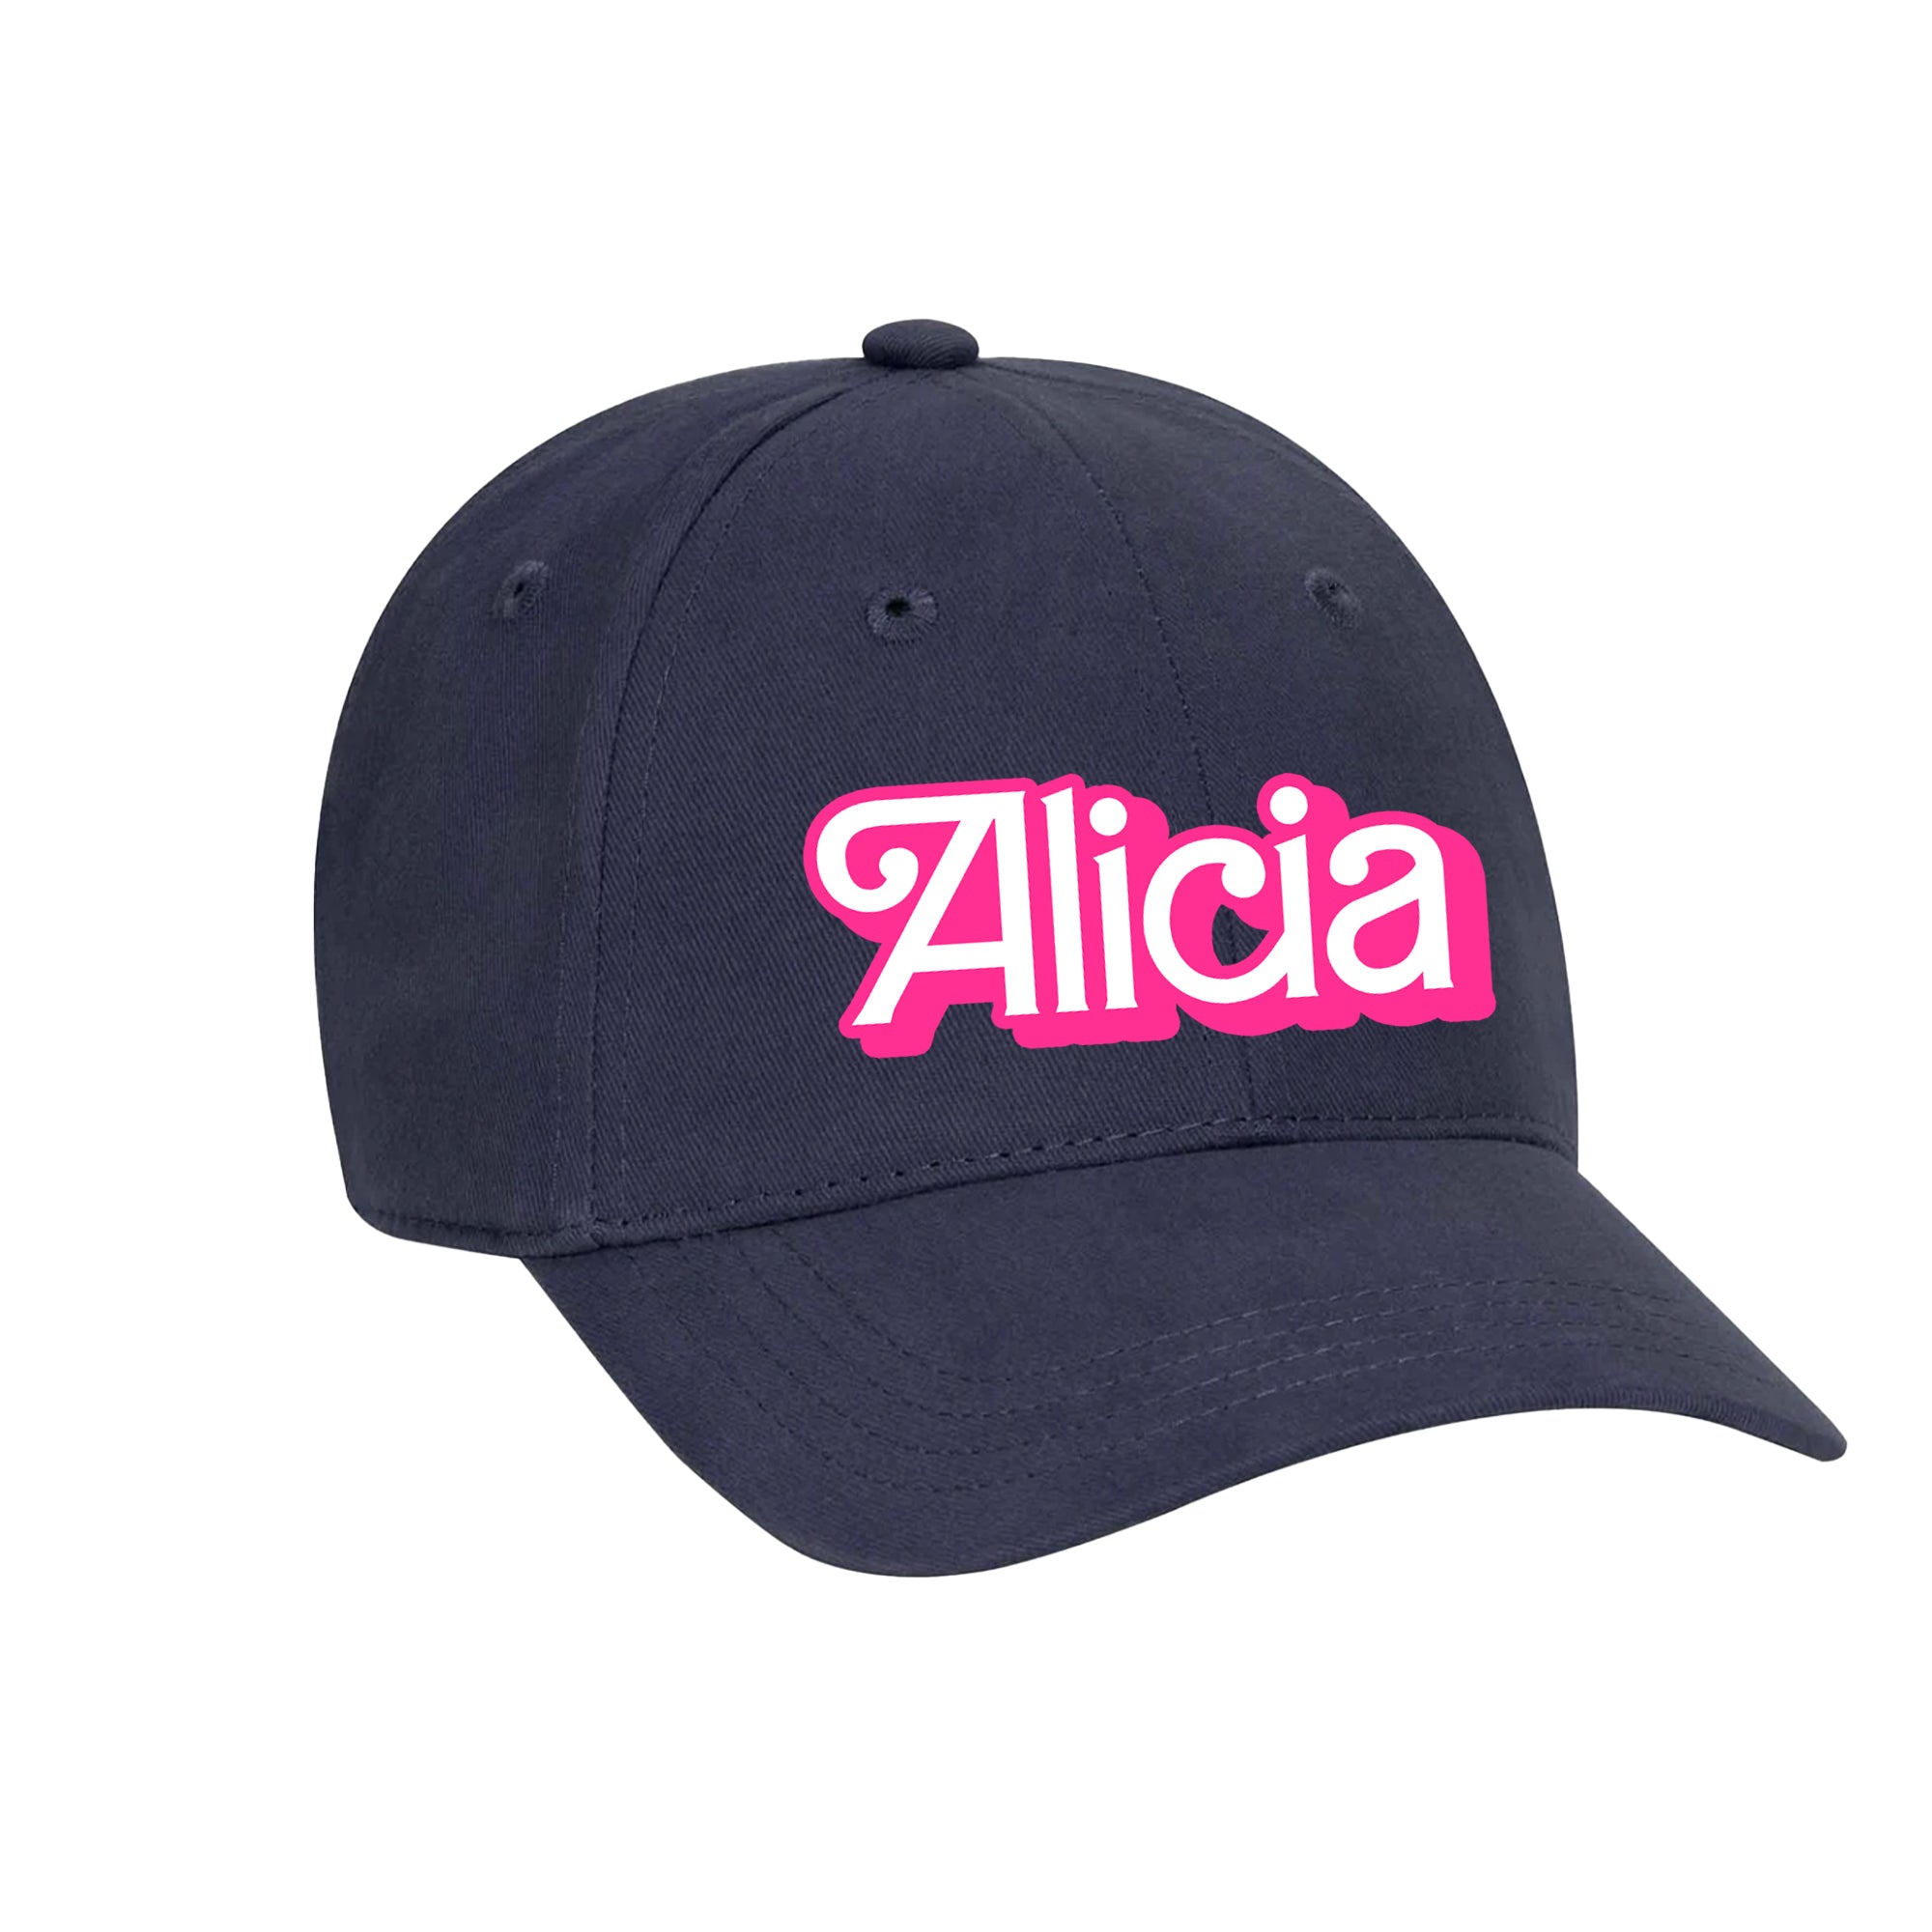 KIDS Personalized Hat - Pink World